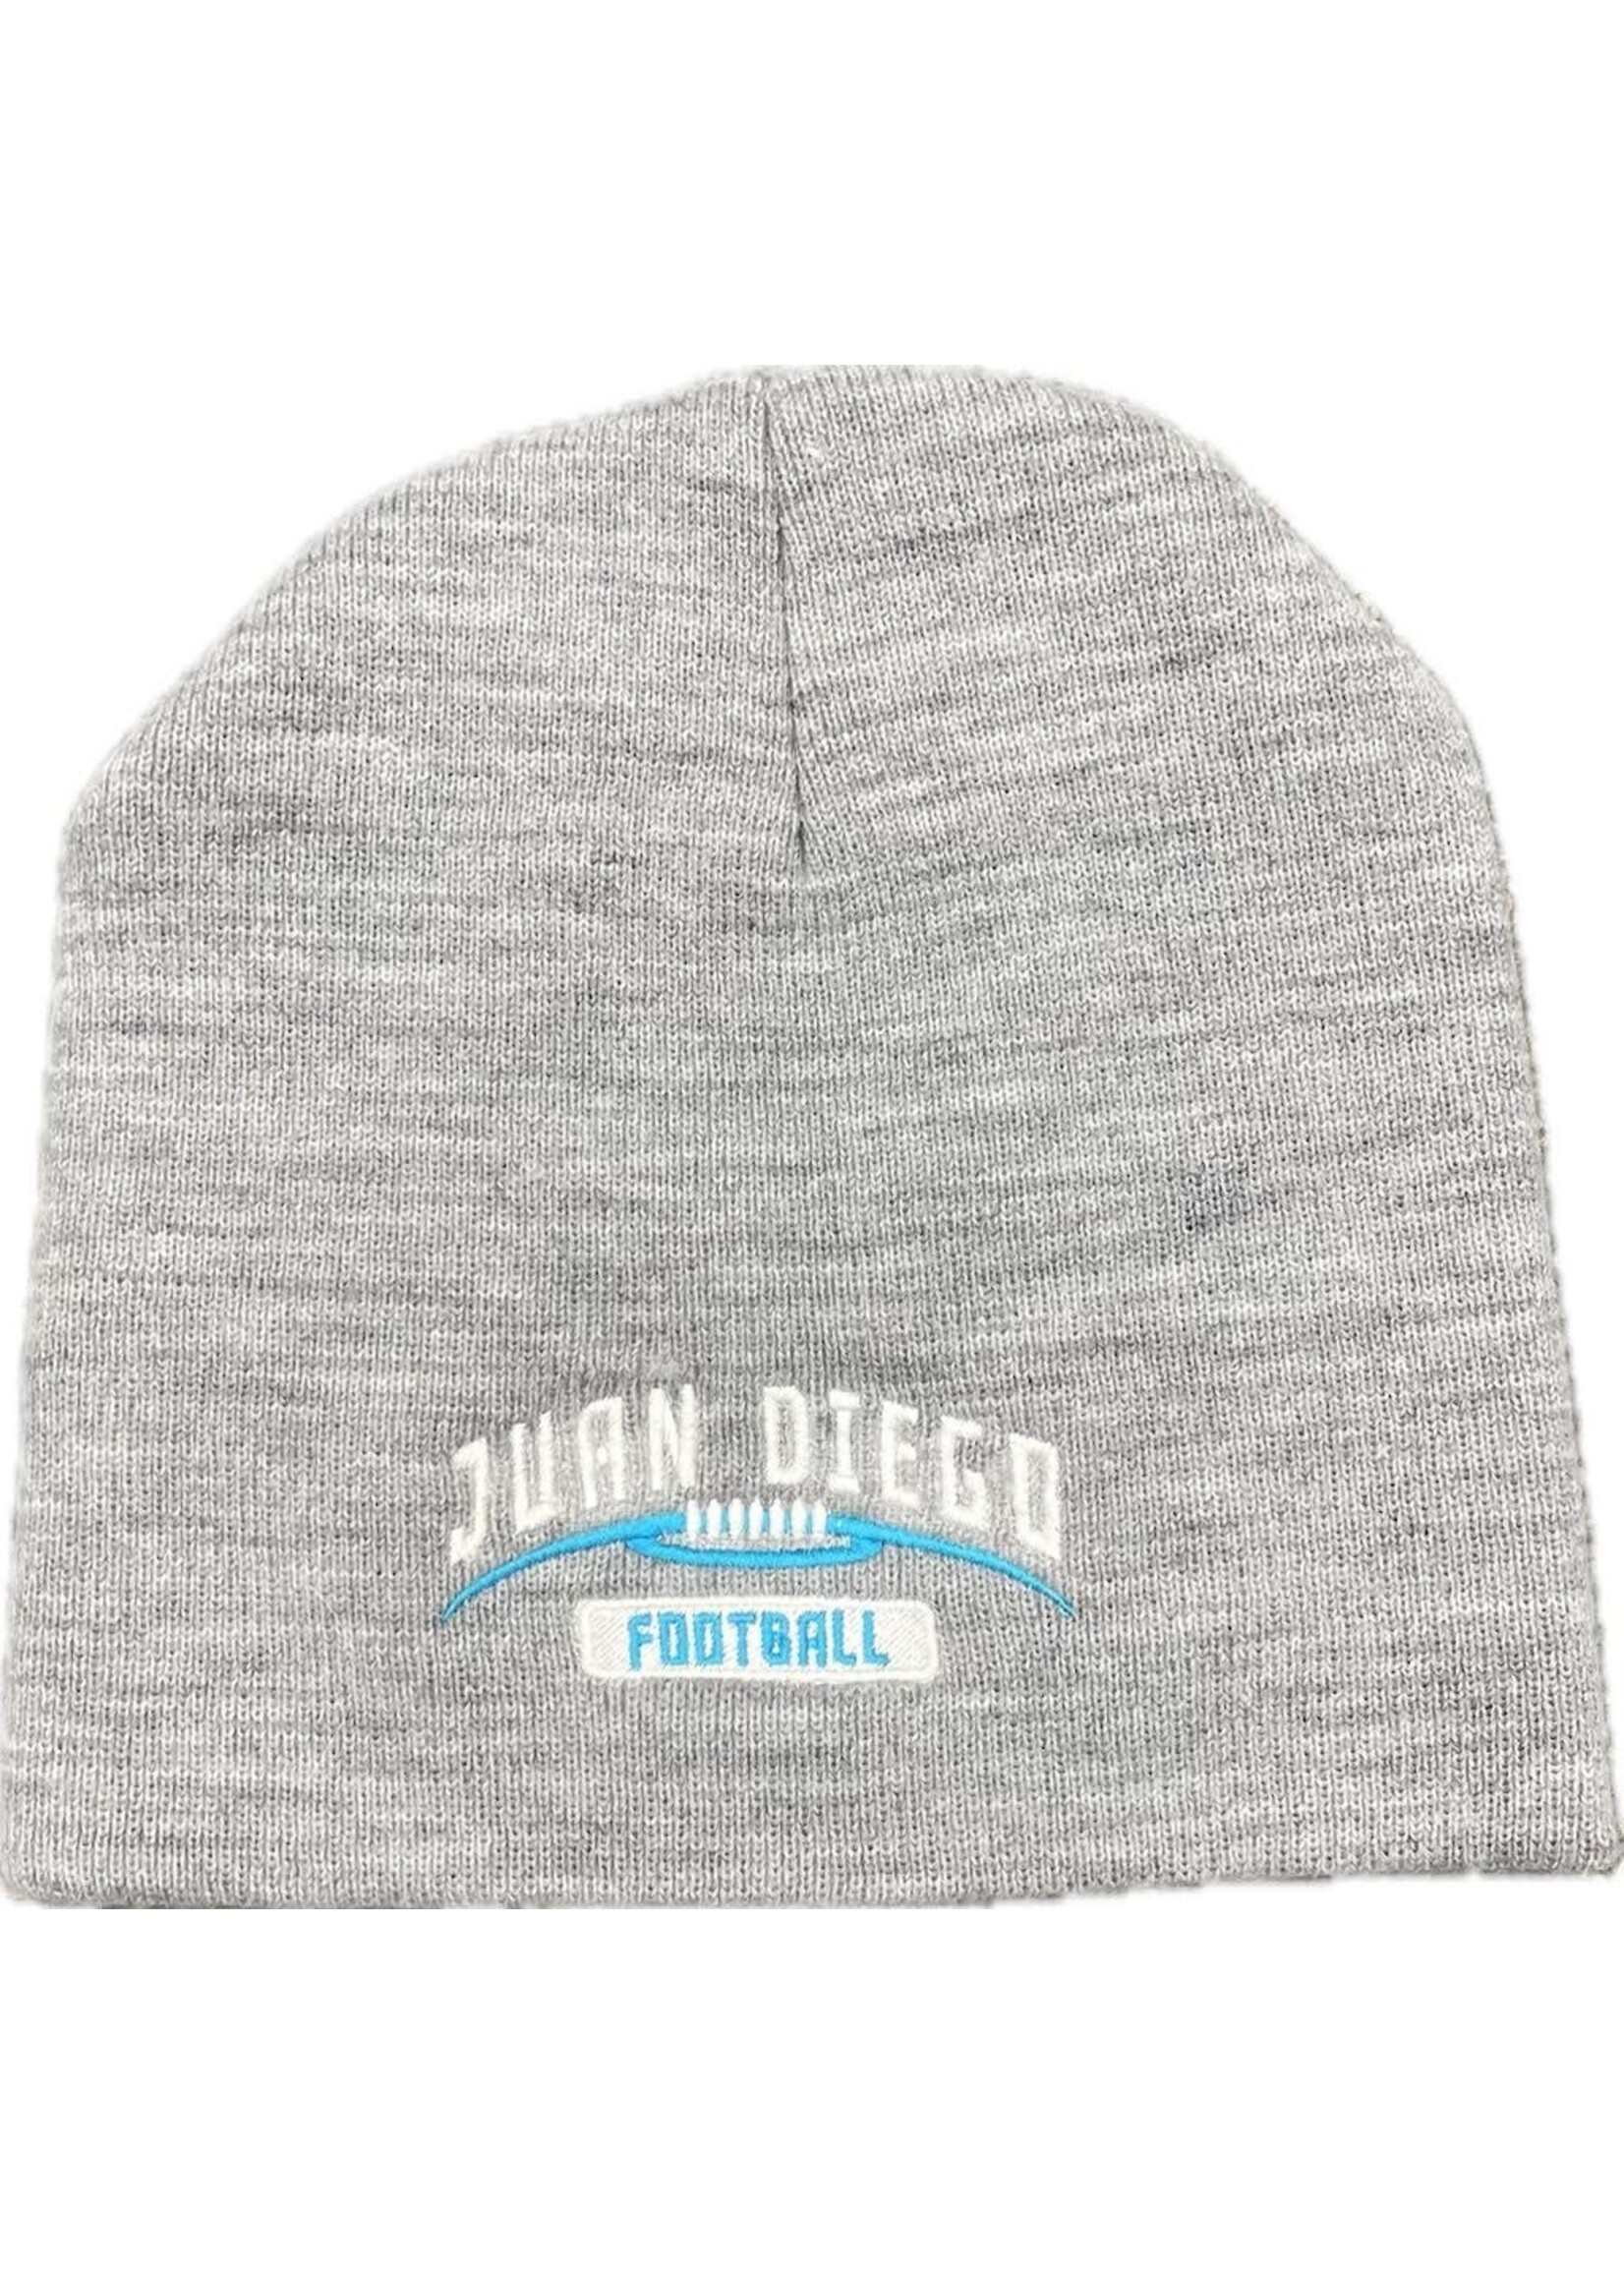 NON-UNIFORM Hat - Custom Beanie w/ Football Embroidery